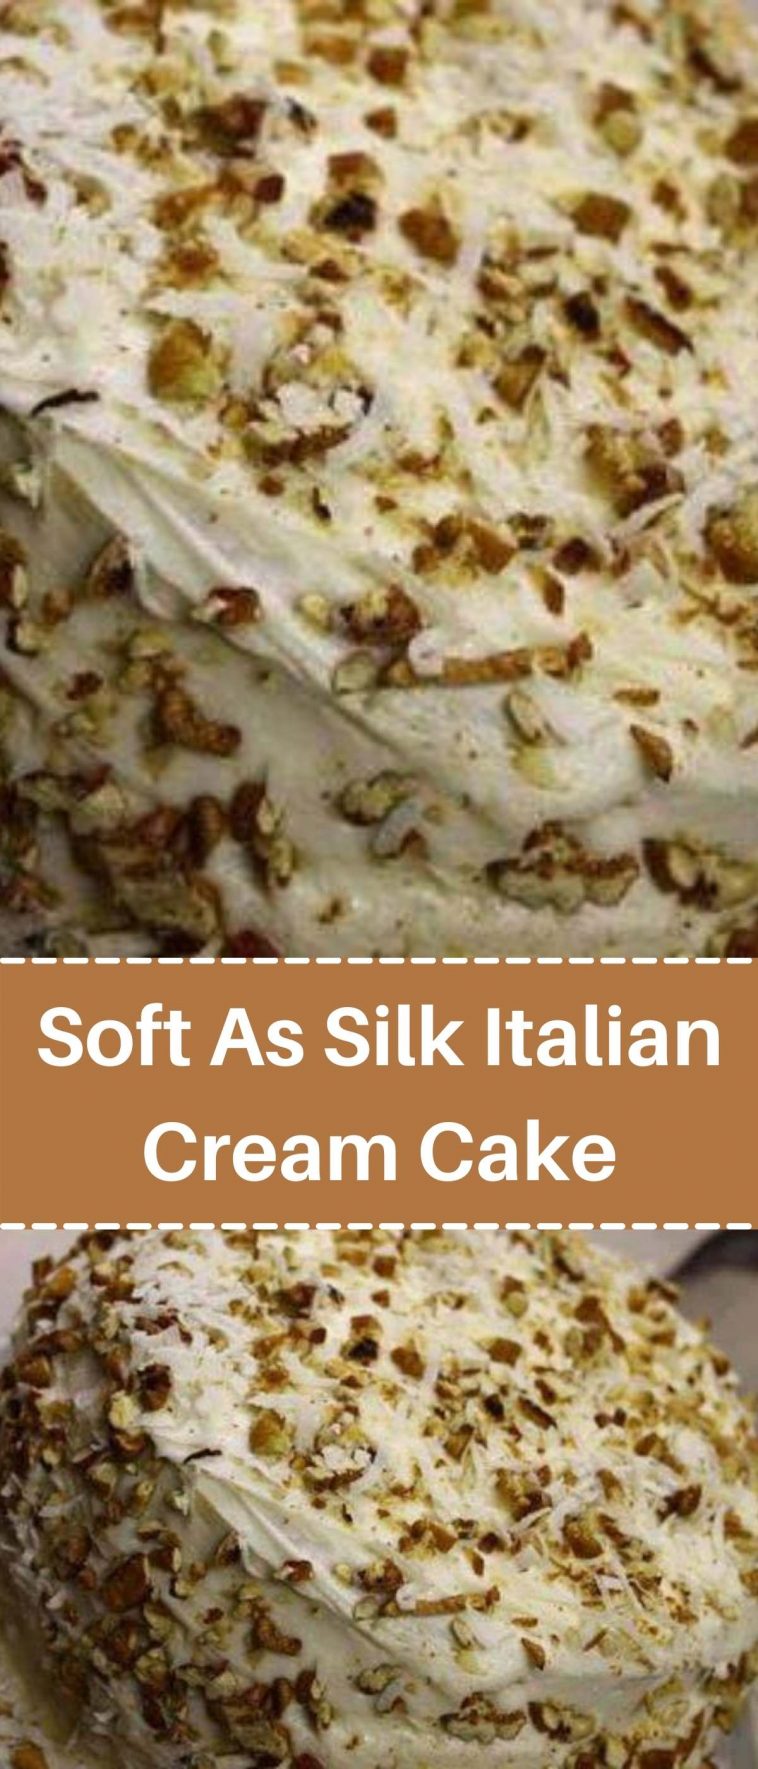 Soft As Silk Italian Cream Cake